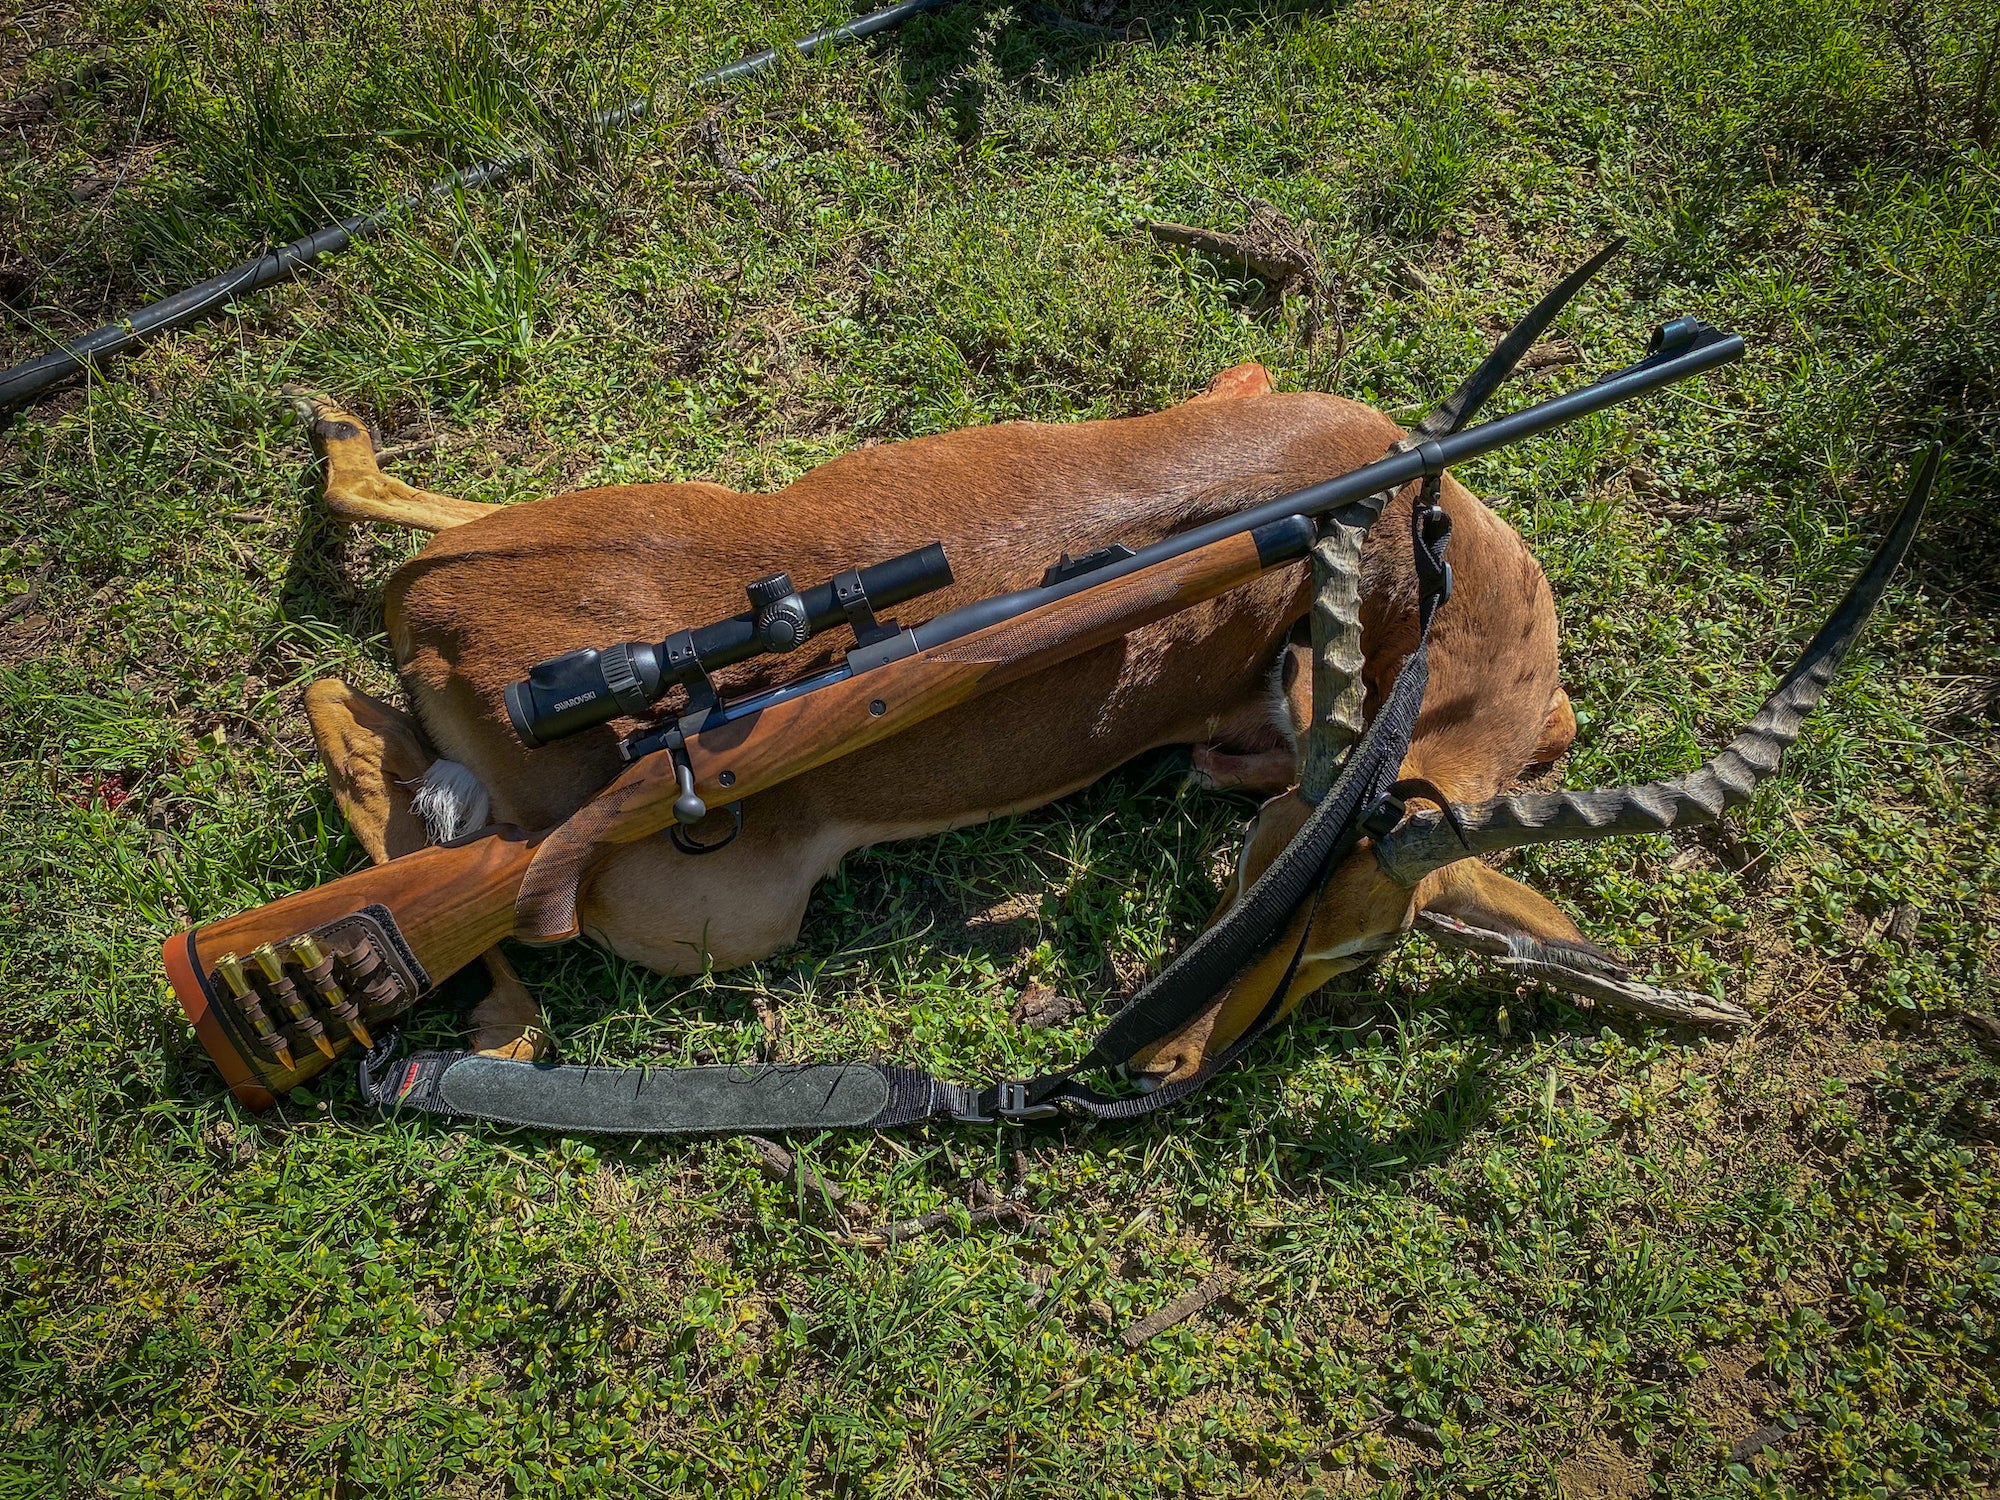 Dead impala with a Kimber Caprivi rifle.